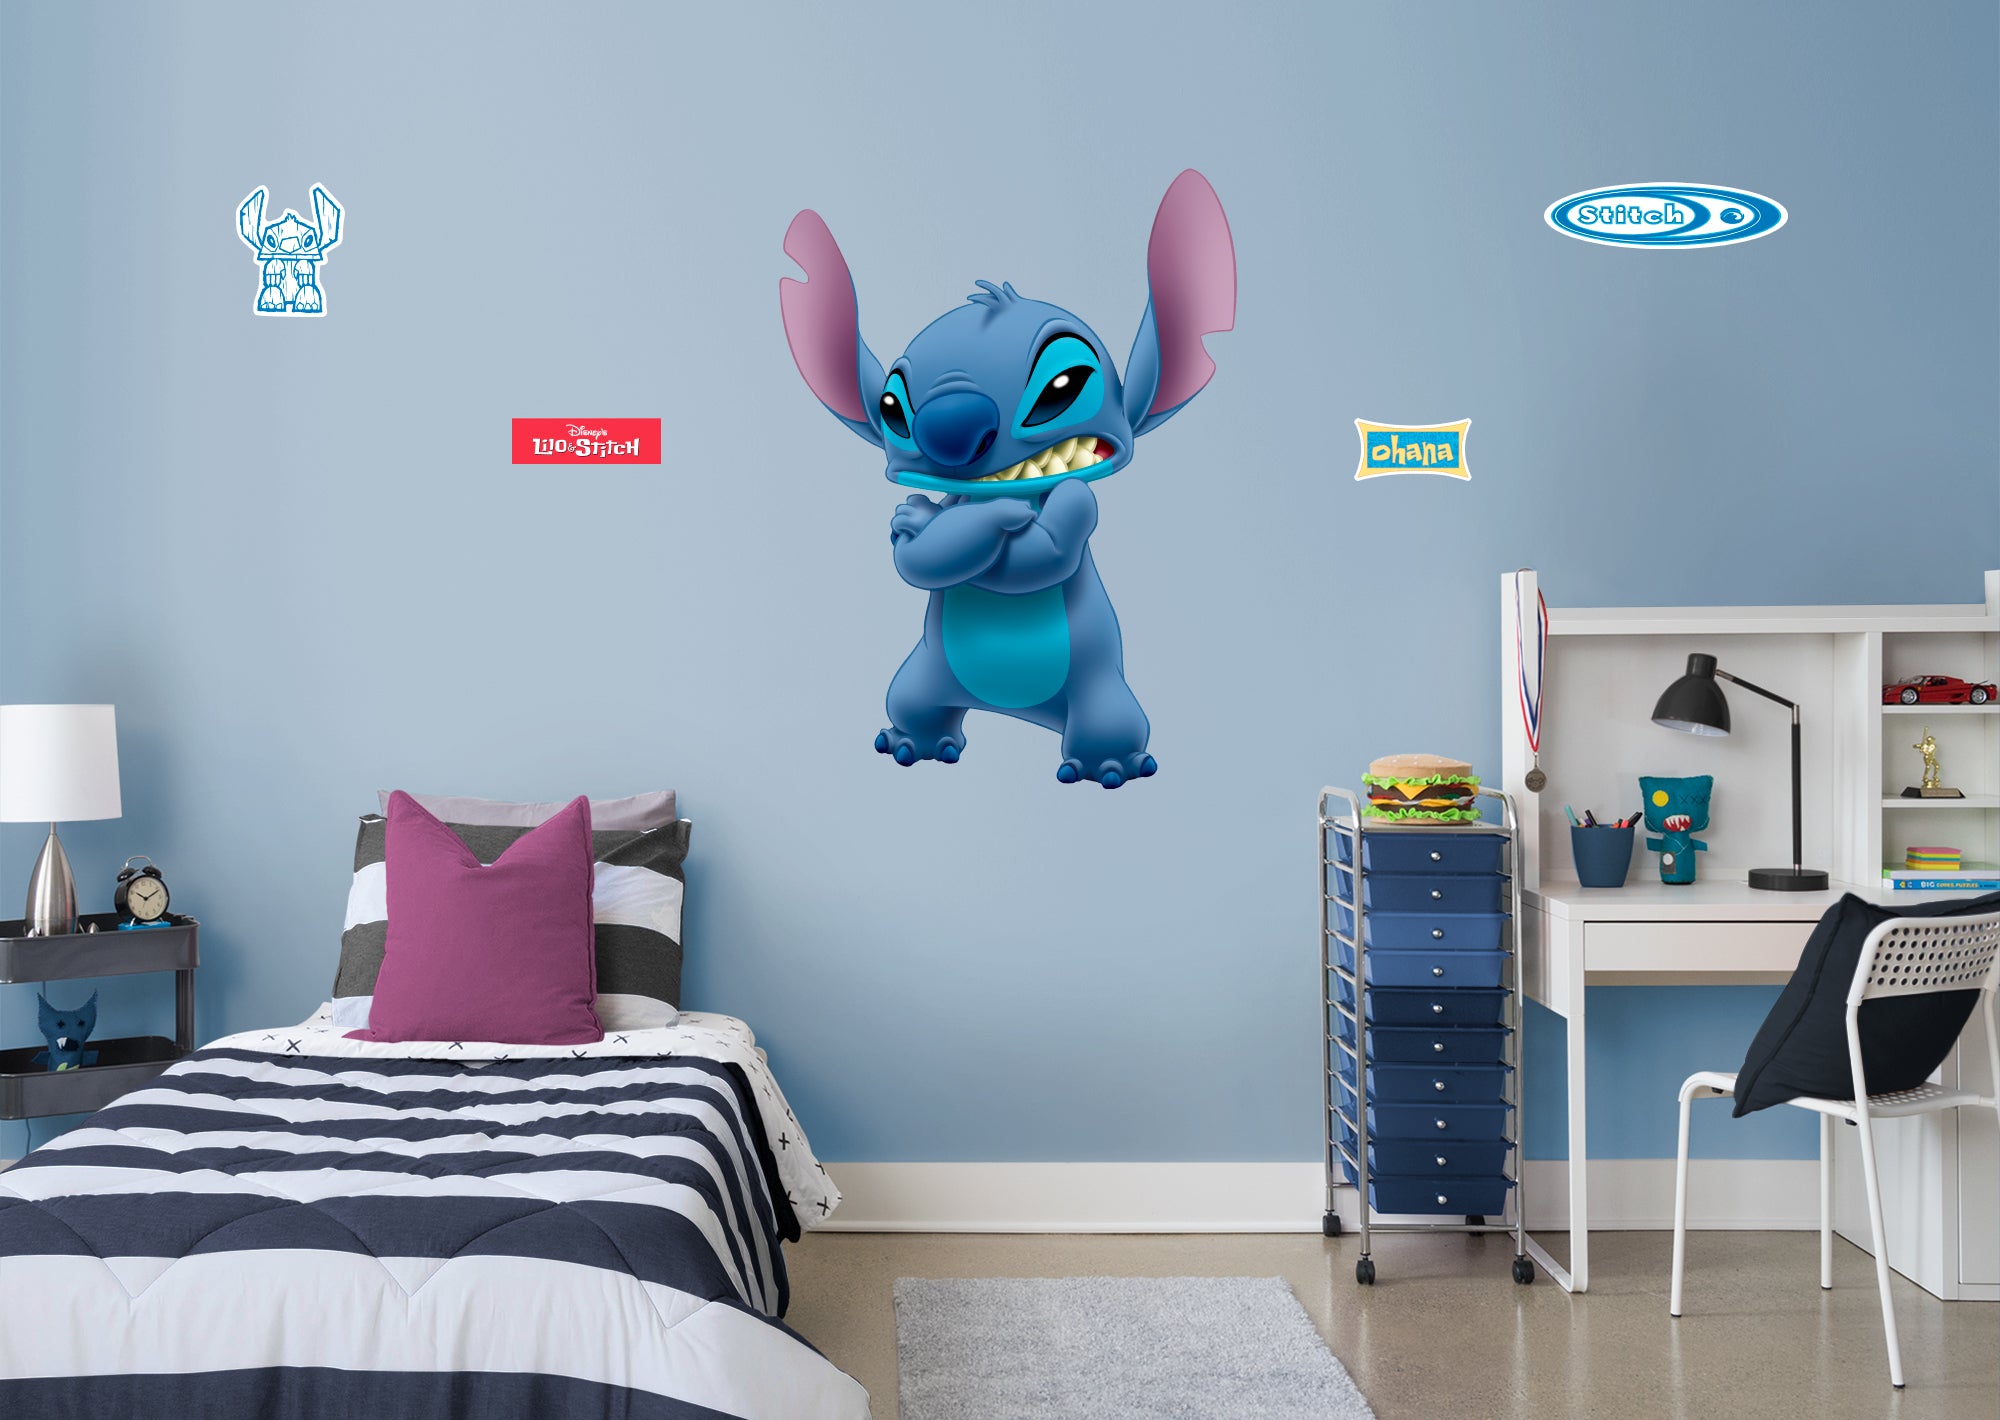 Lilo & Stitch: Stitch RealBig - Disney Removable Adhesive Wall Decal XL